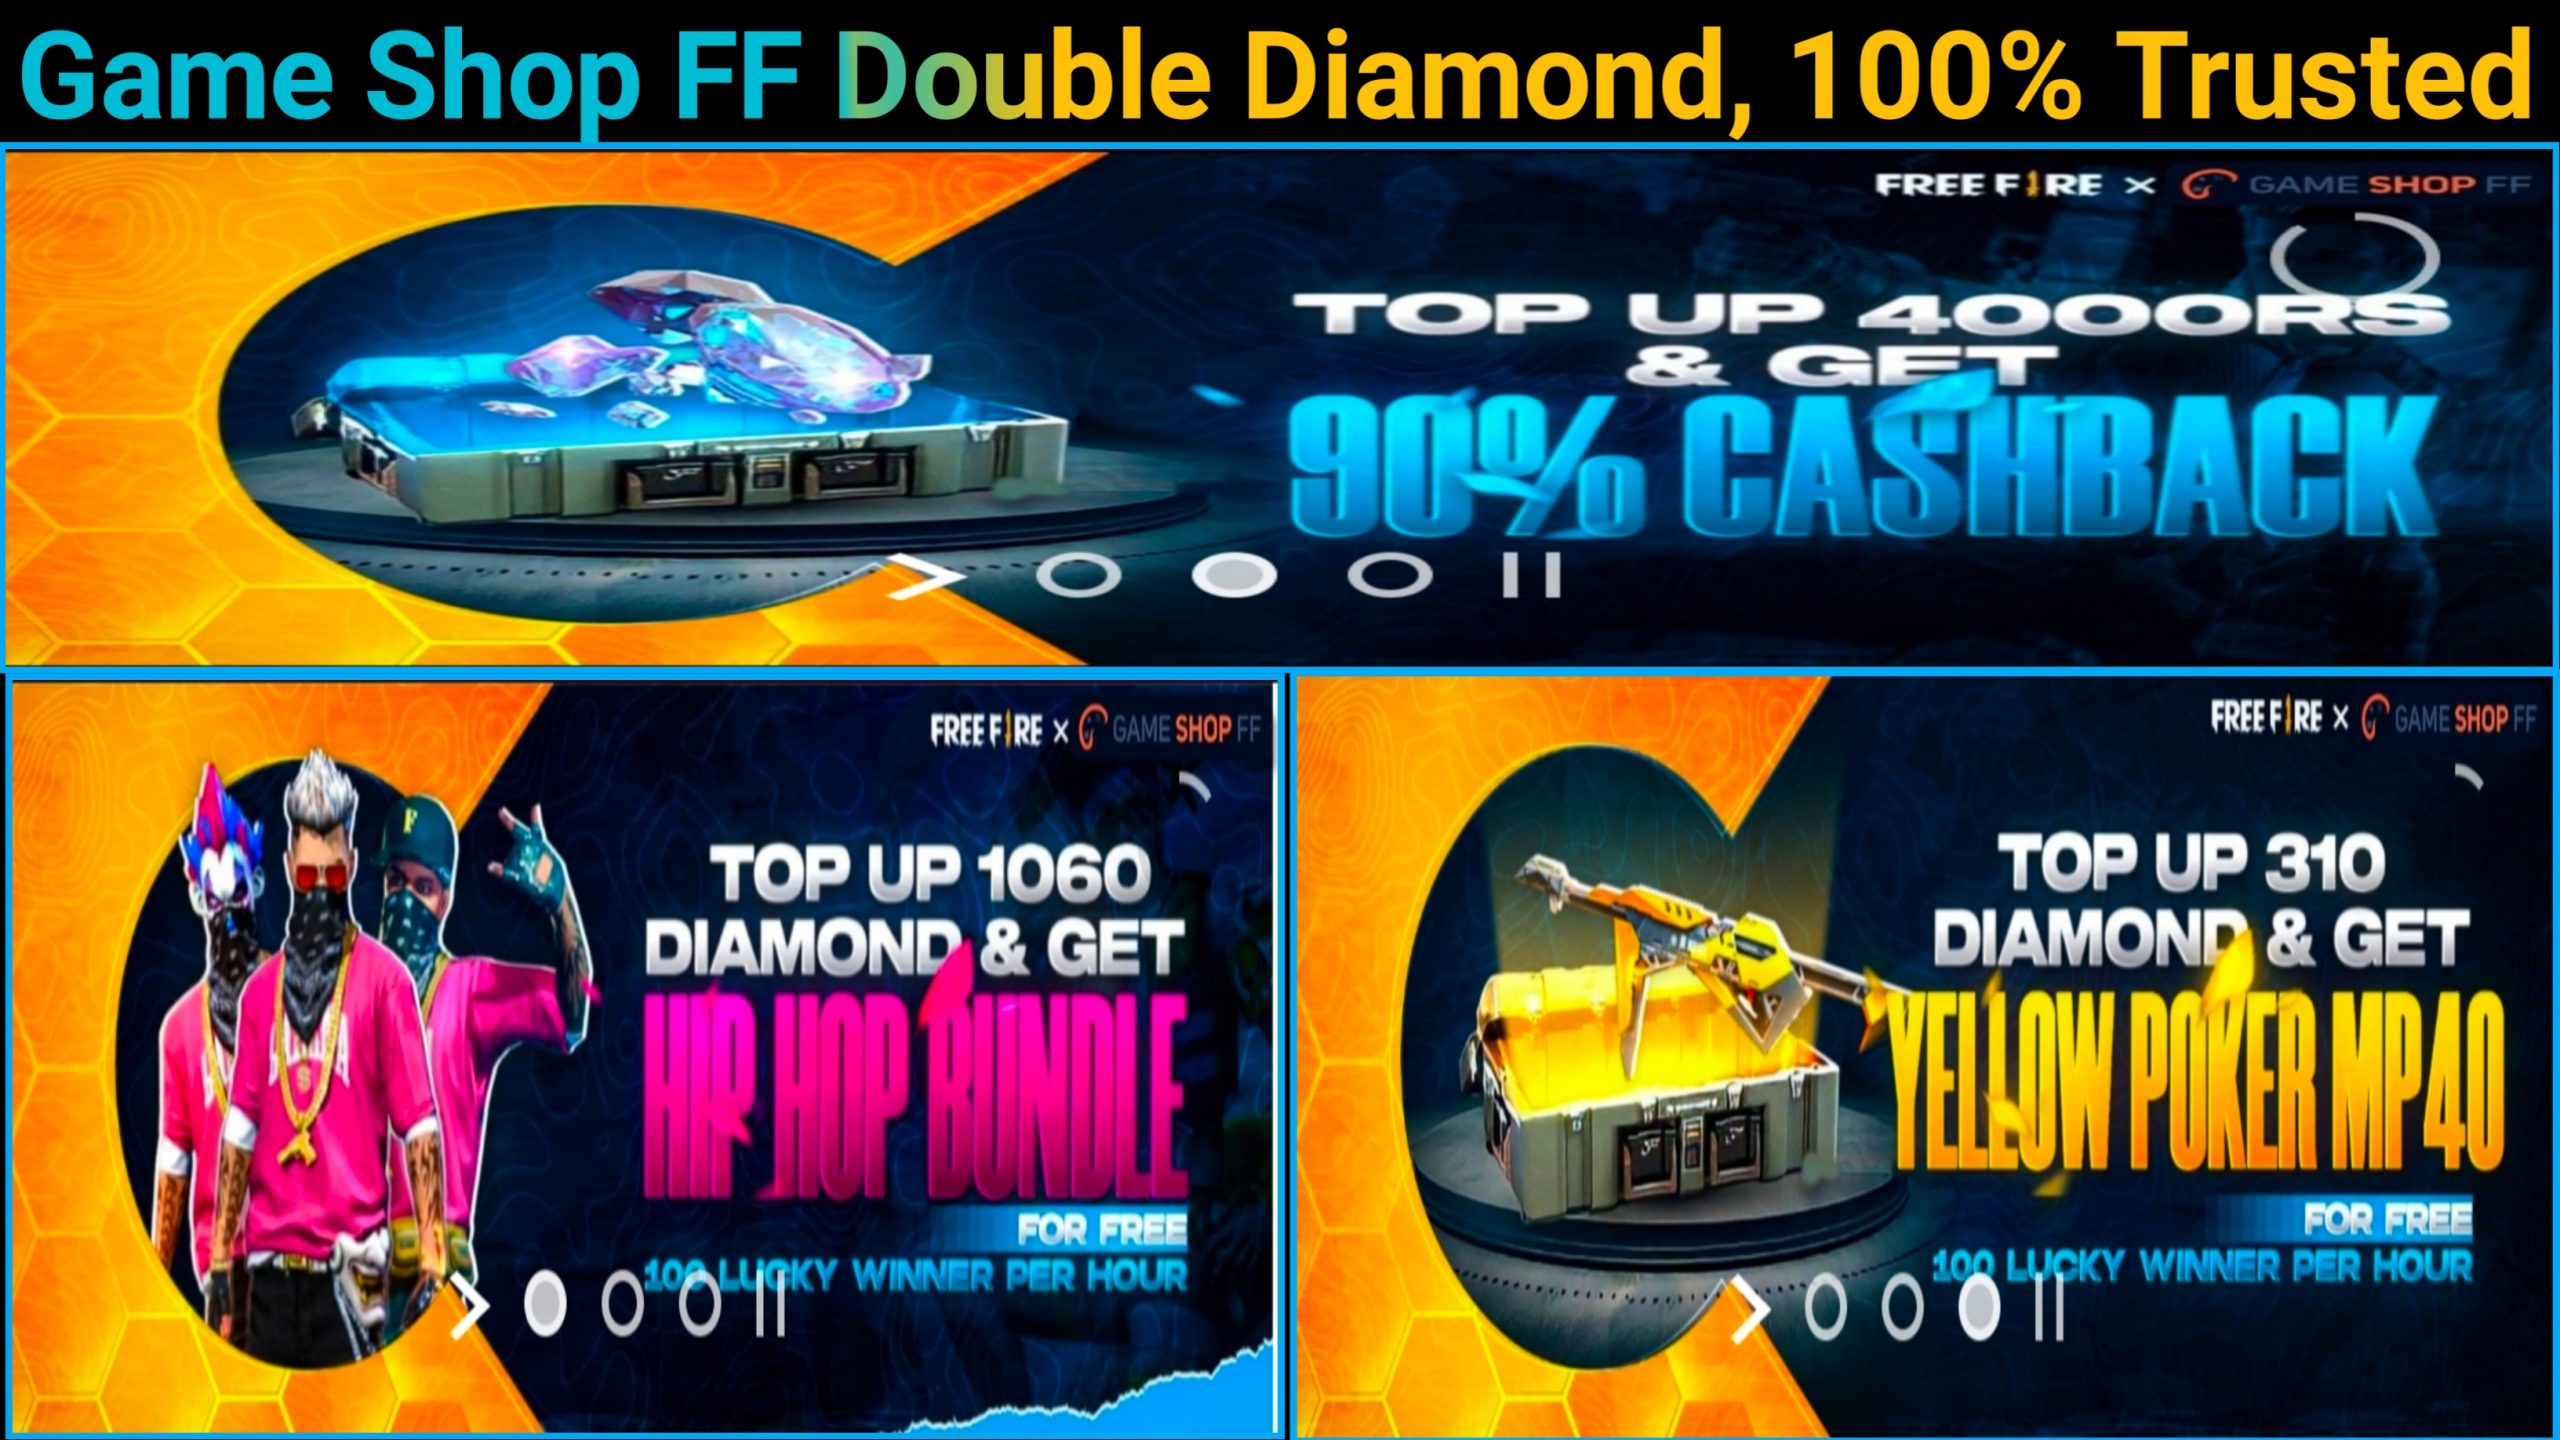 GAME SHOP FF DOUBLE DIAMOND TOPUP WEBSITE